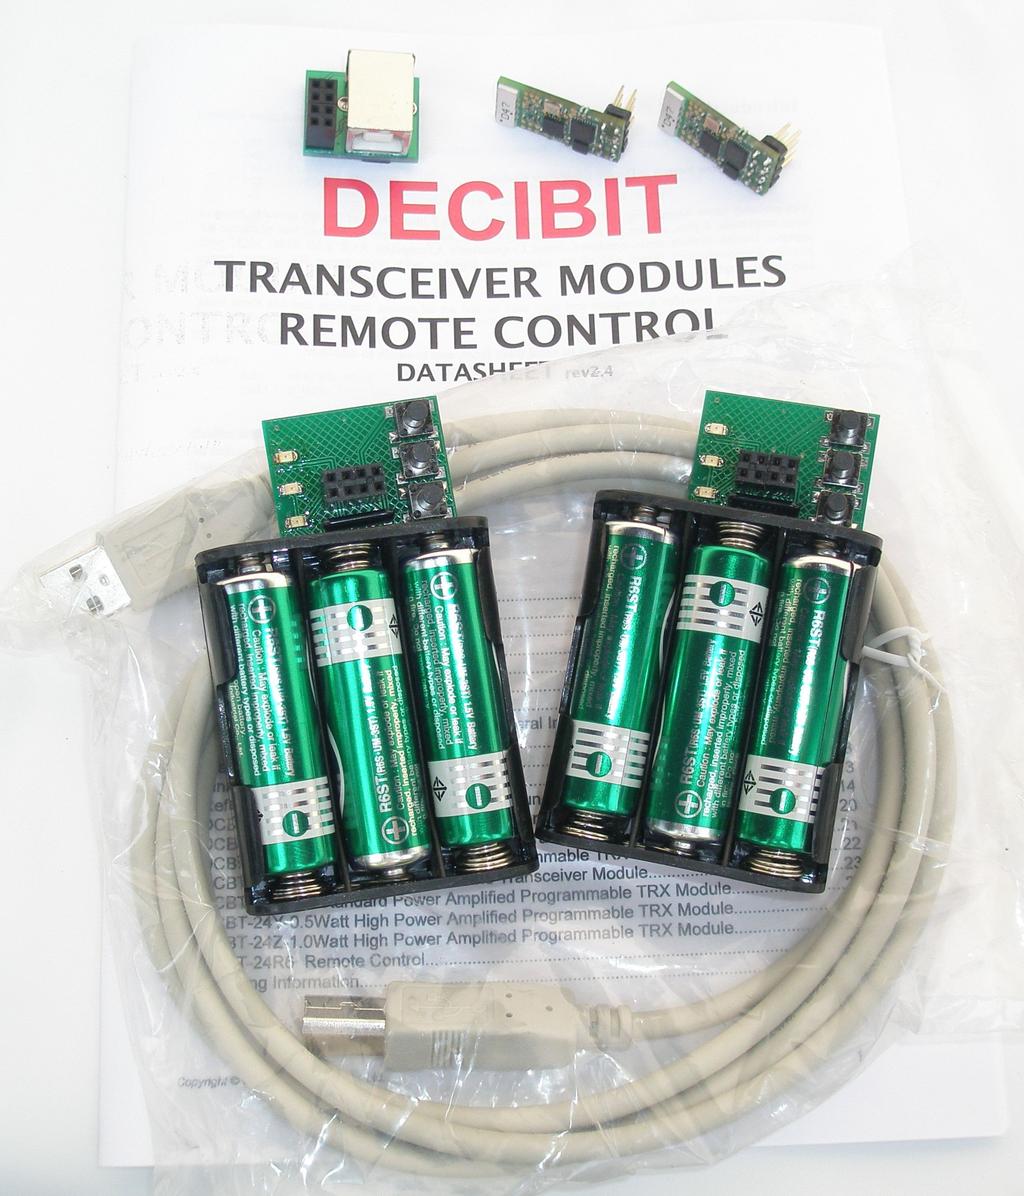 Decibit Development Kit (DDK) Contents 1 CDROM 1 USB Programmer 1 USB cable 2 Modules DCBT-24AX